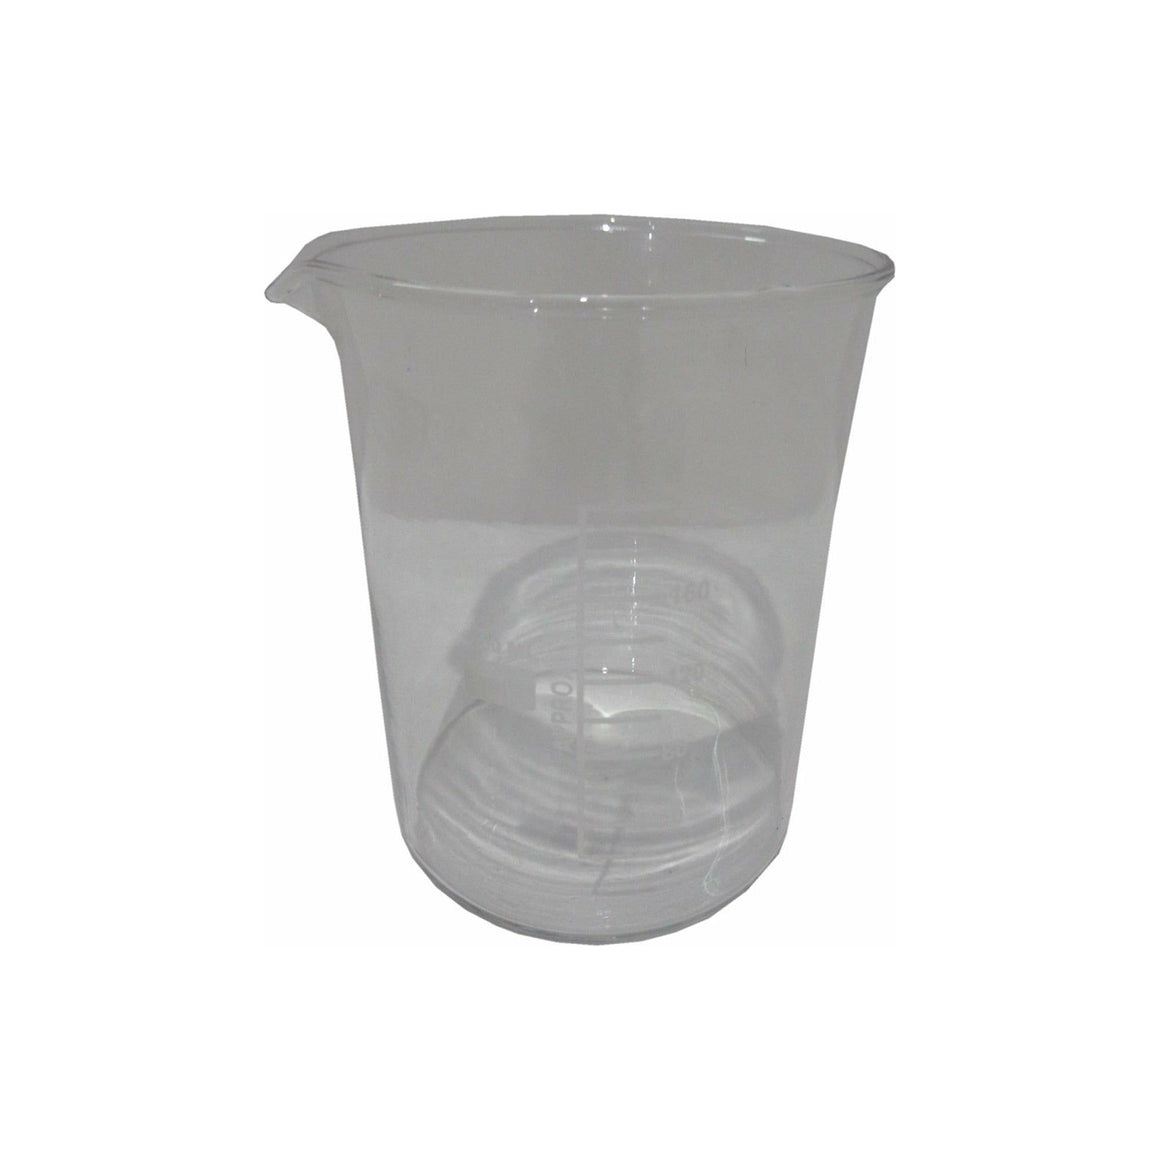 Reproduction Clear Glass Measuring Beaker - C